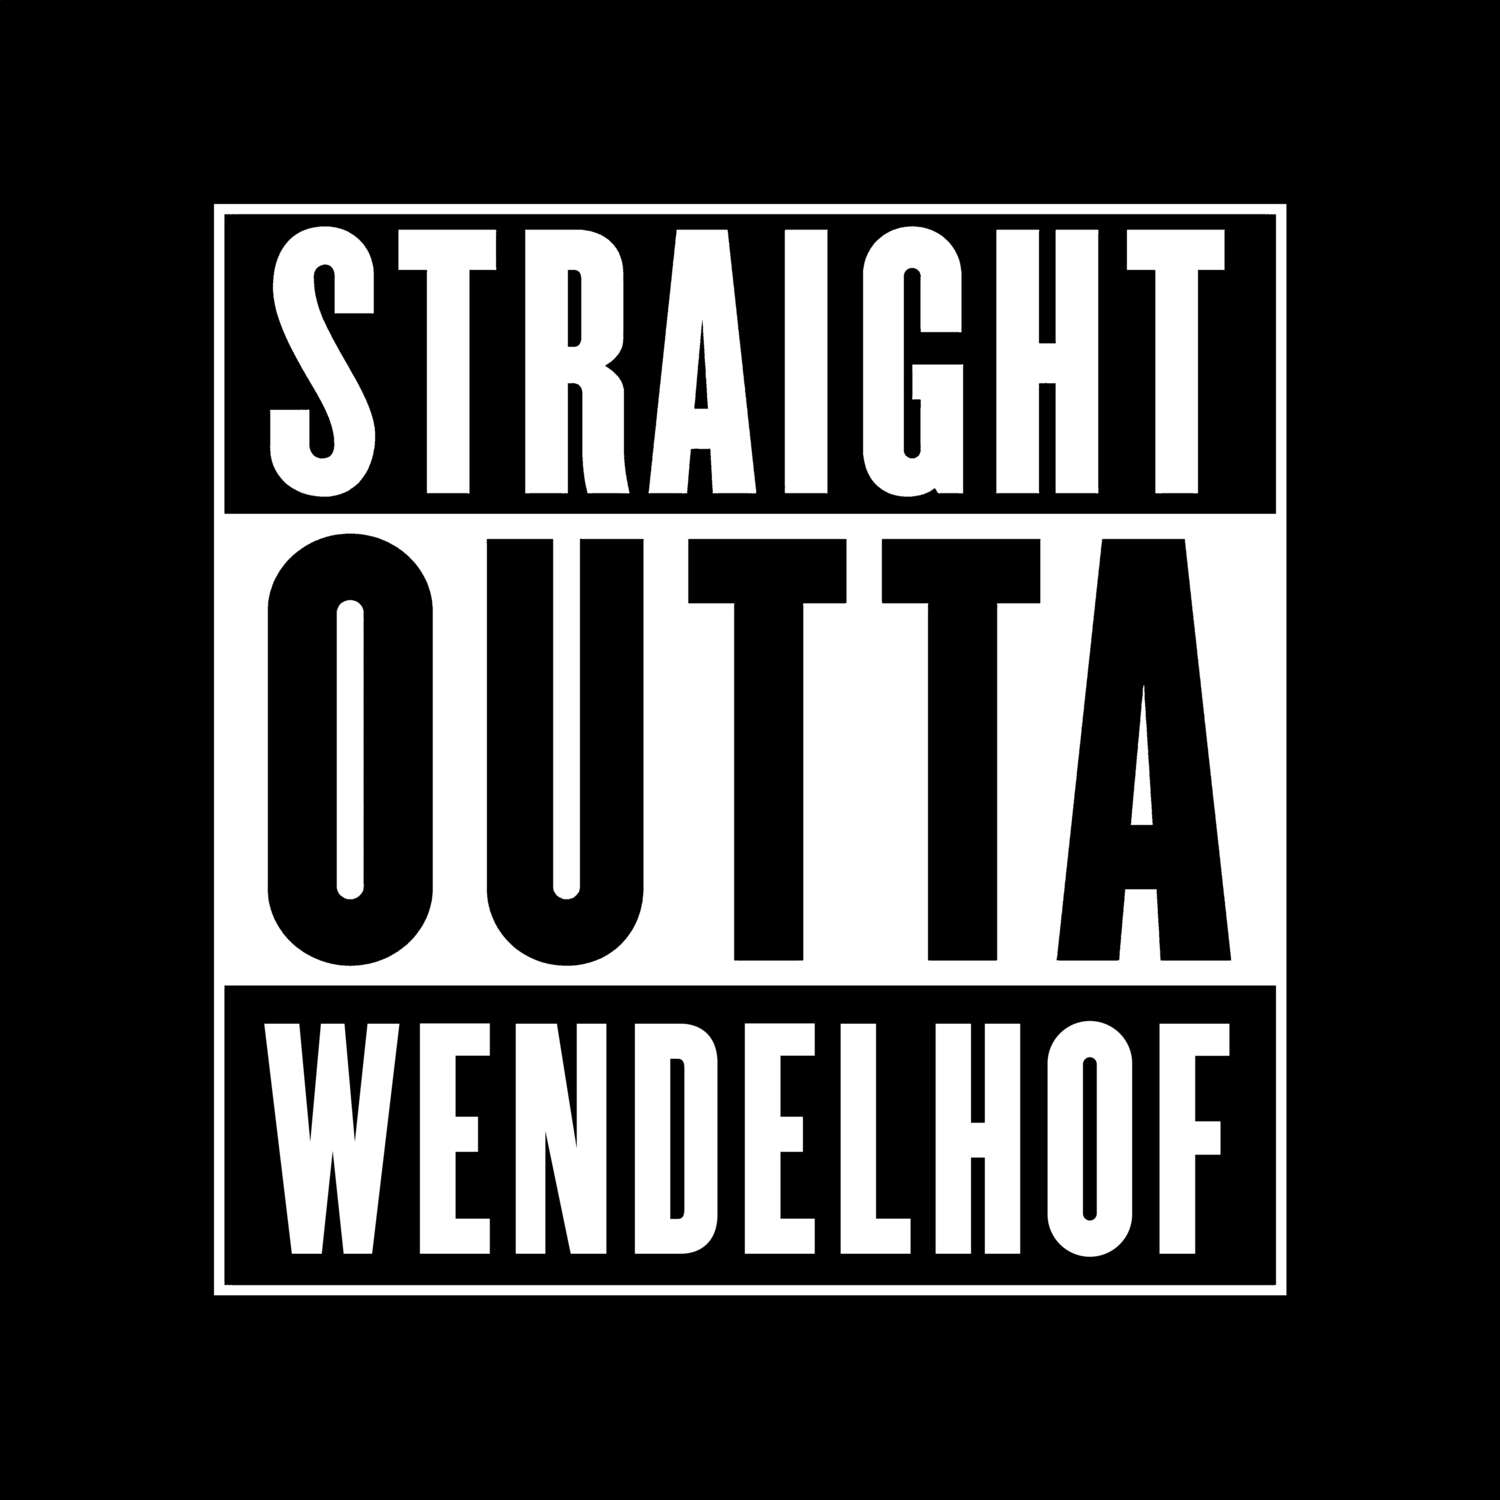 Wendelhof T-Shirt »Straight Outta«